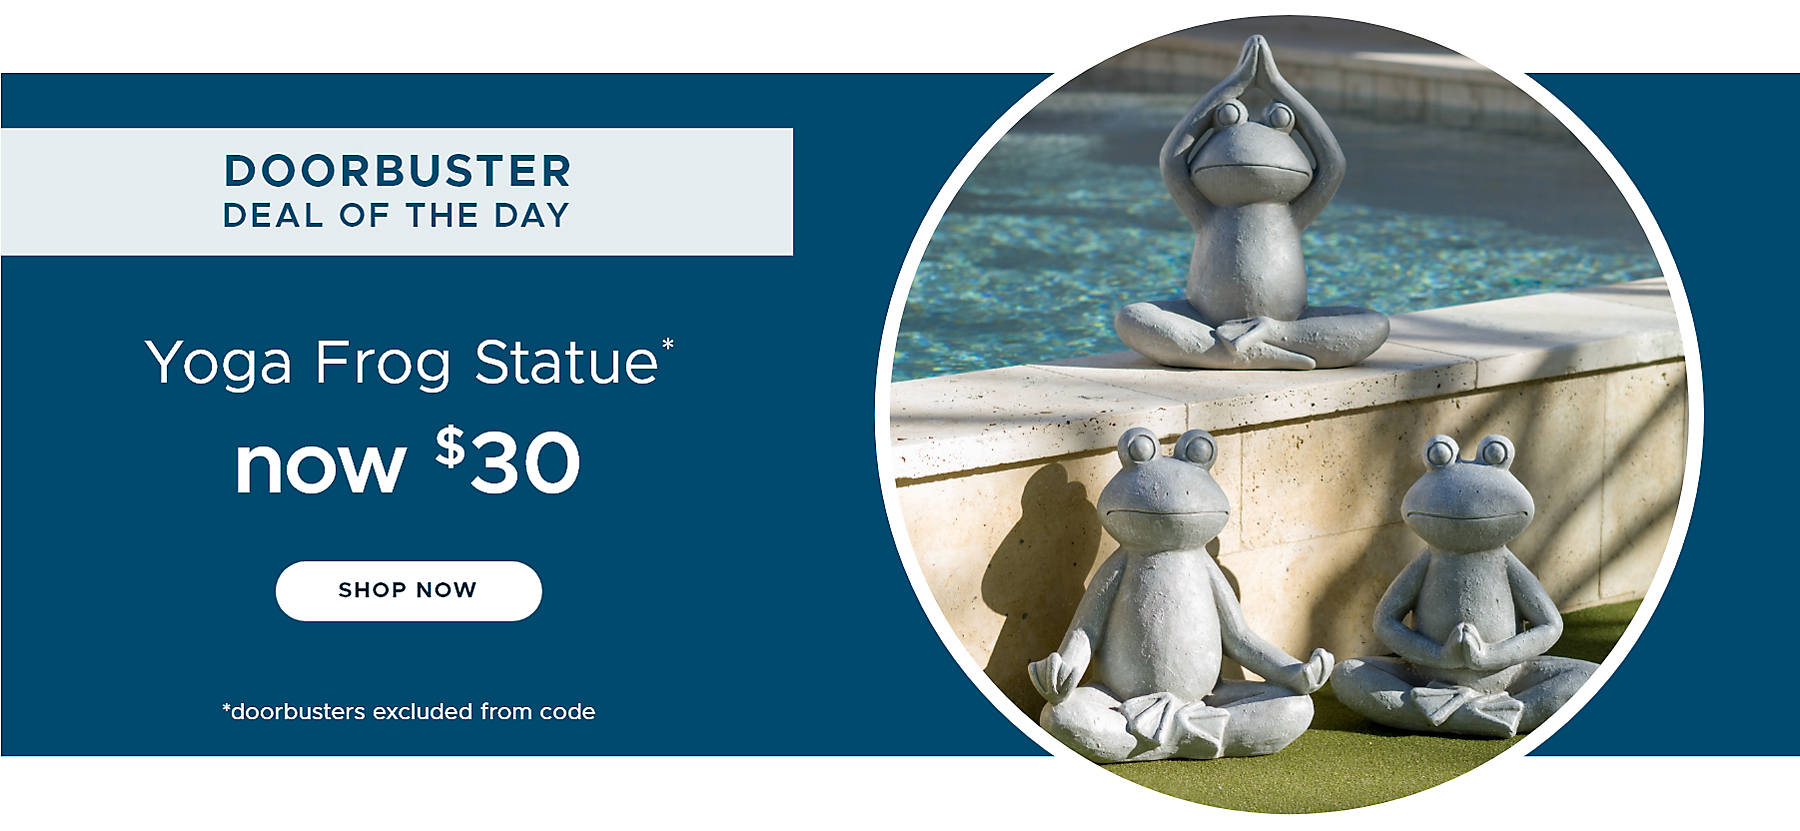 Doorbuster Deal of the Day Yoga Frog Statue* now $30 shop now *doorbusters excluded from code